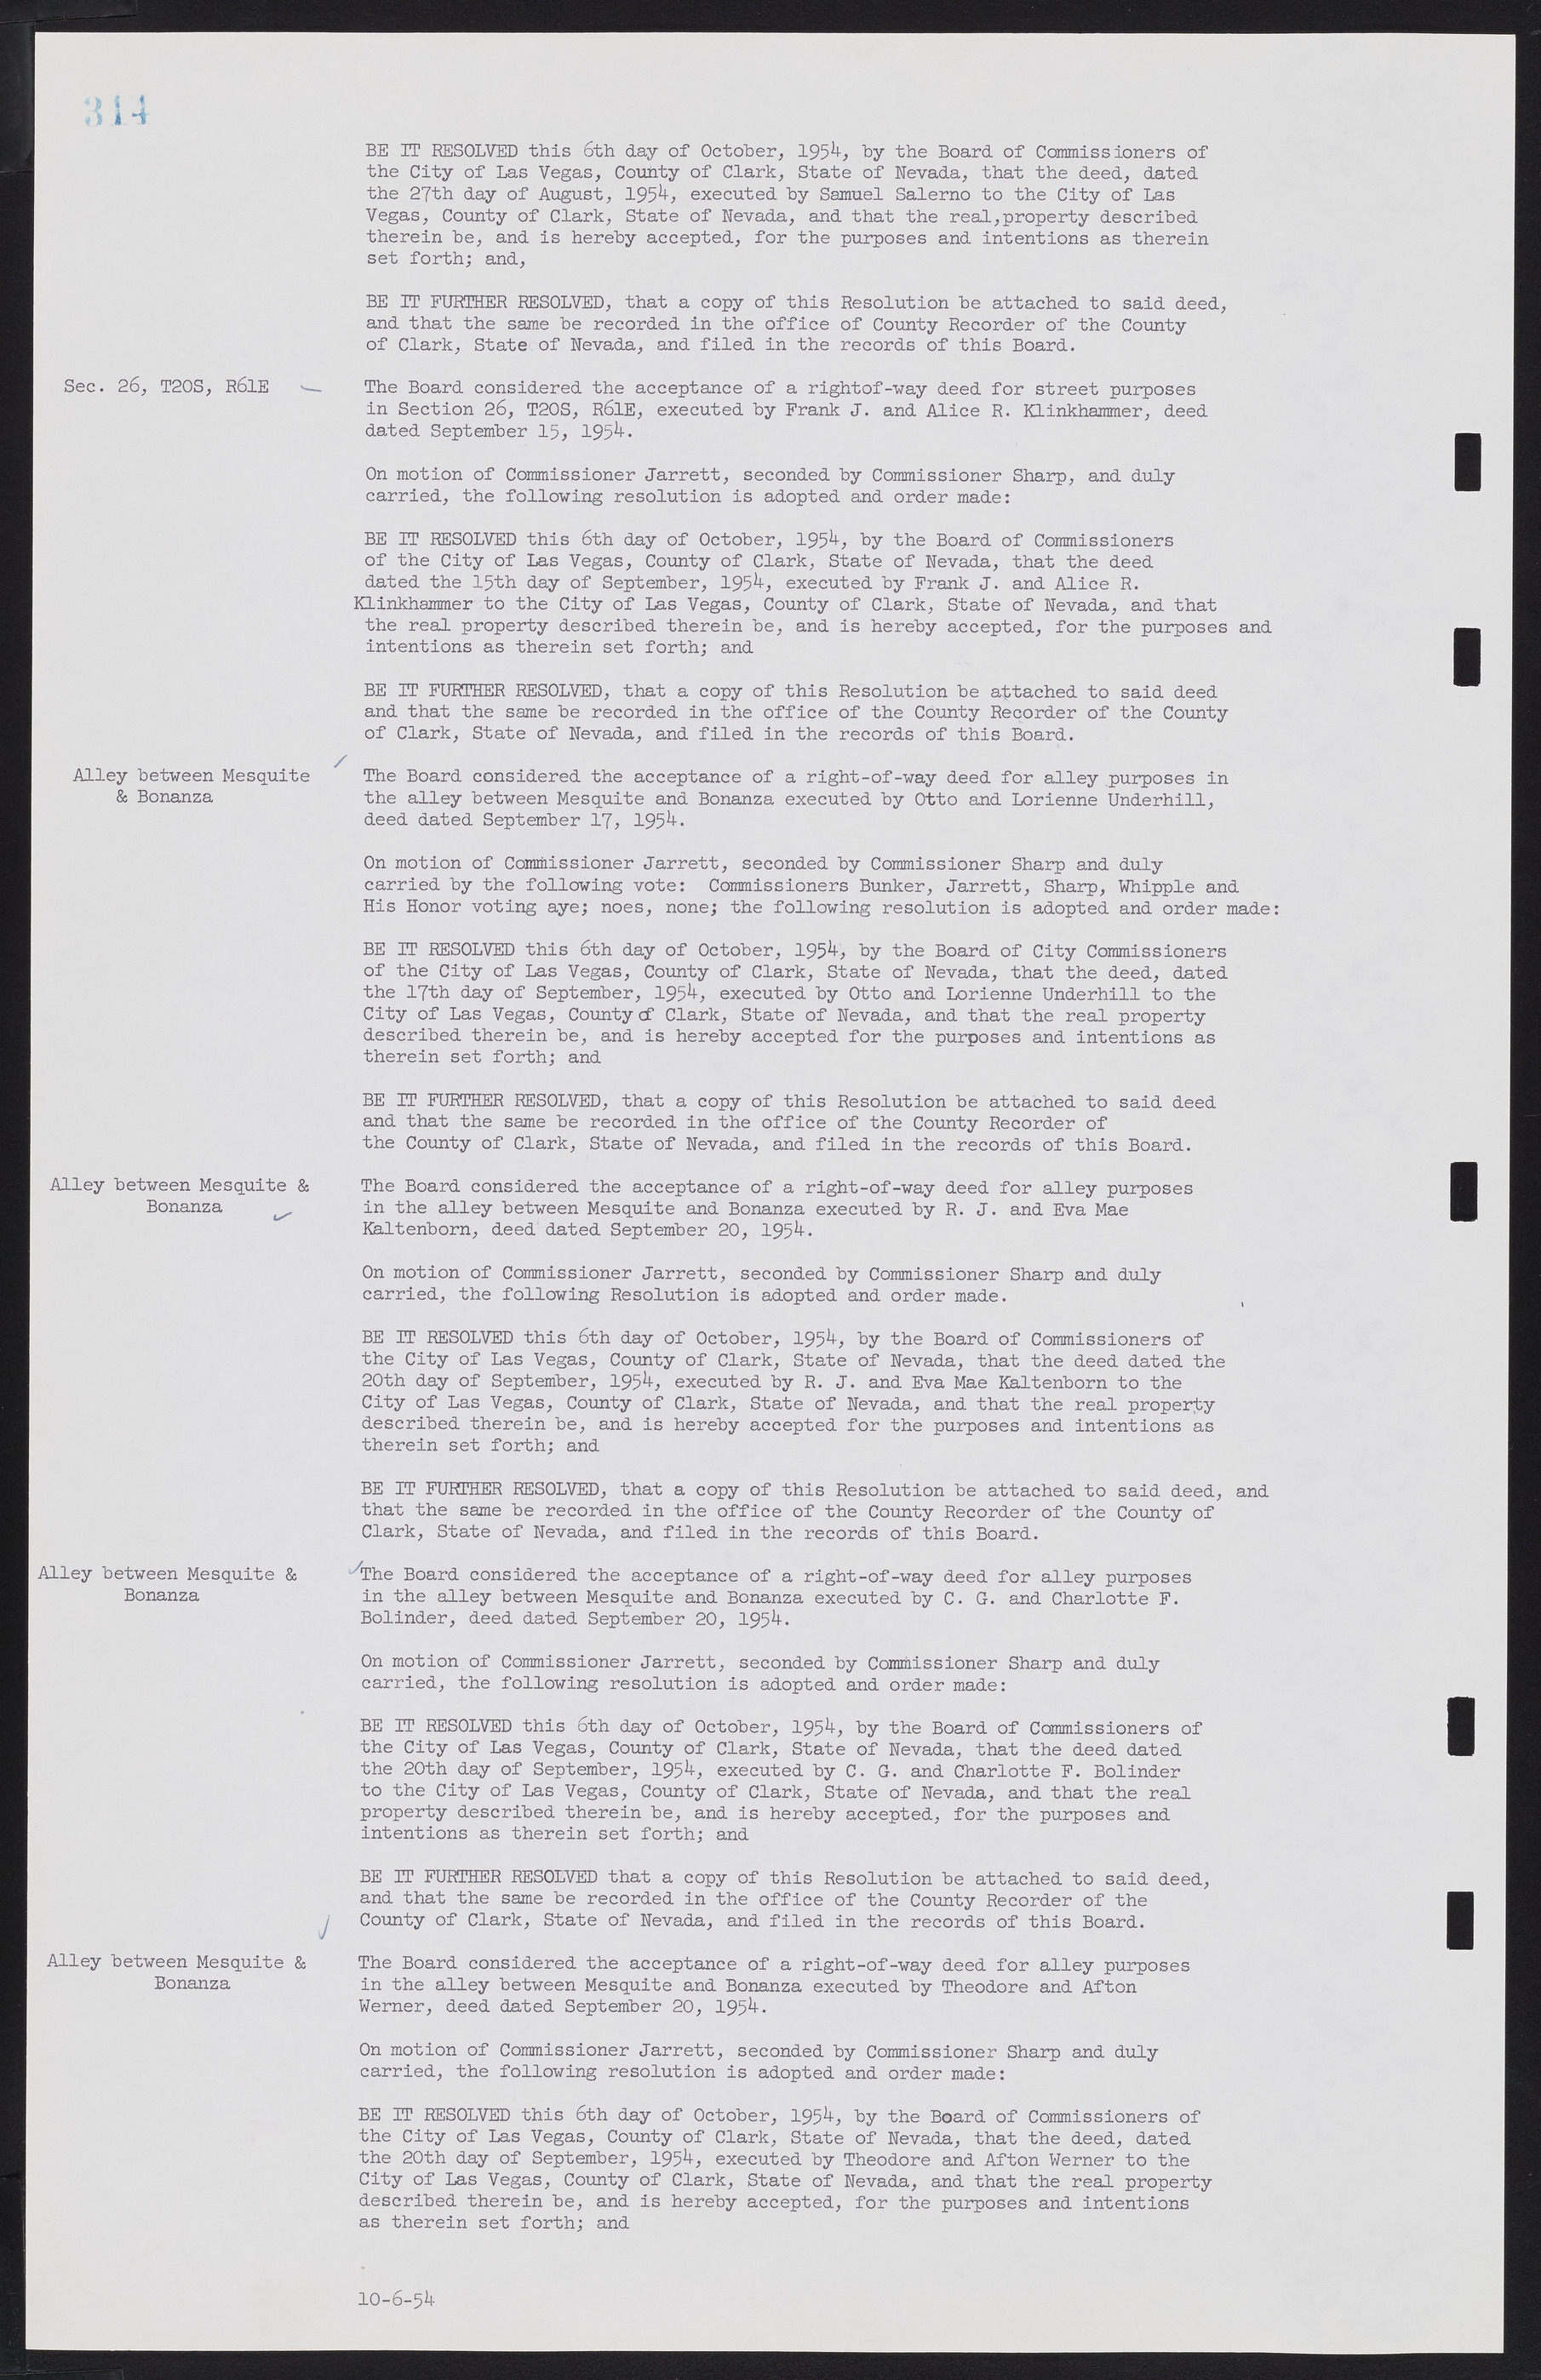 Las Vegas City Commission Minutes, February 17, 1954 to September 21, 1955, lvc000009-320